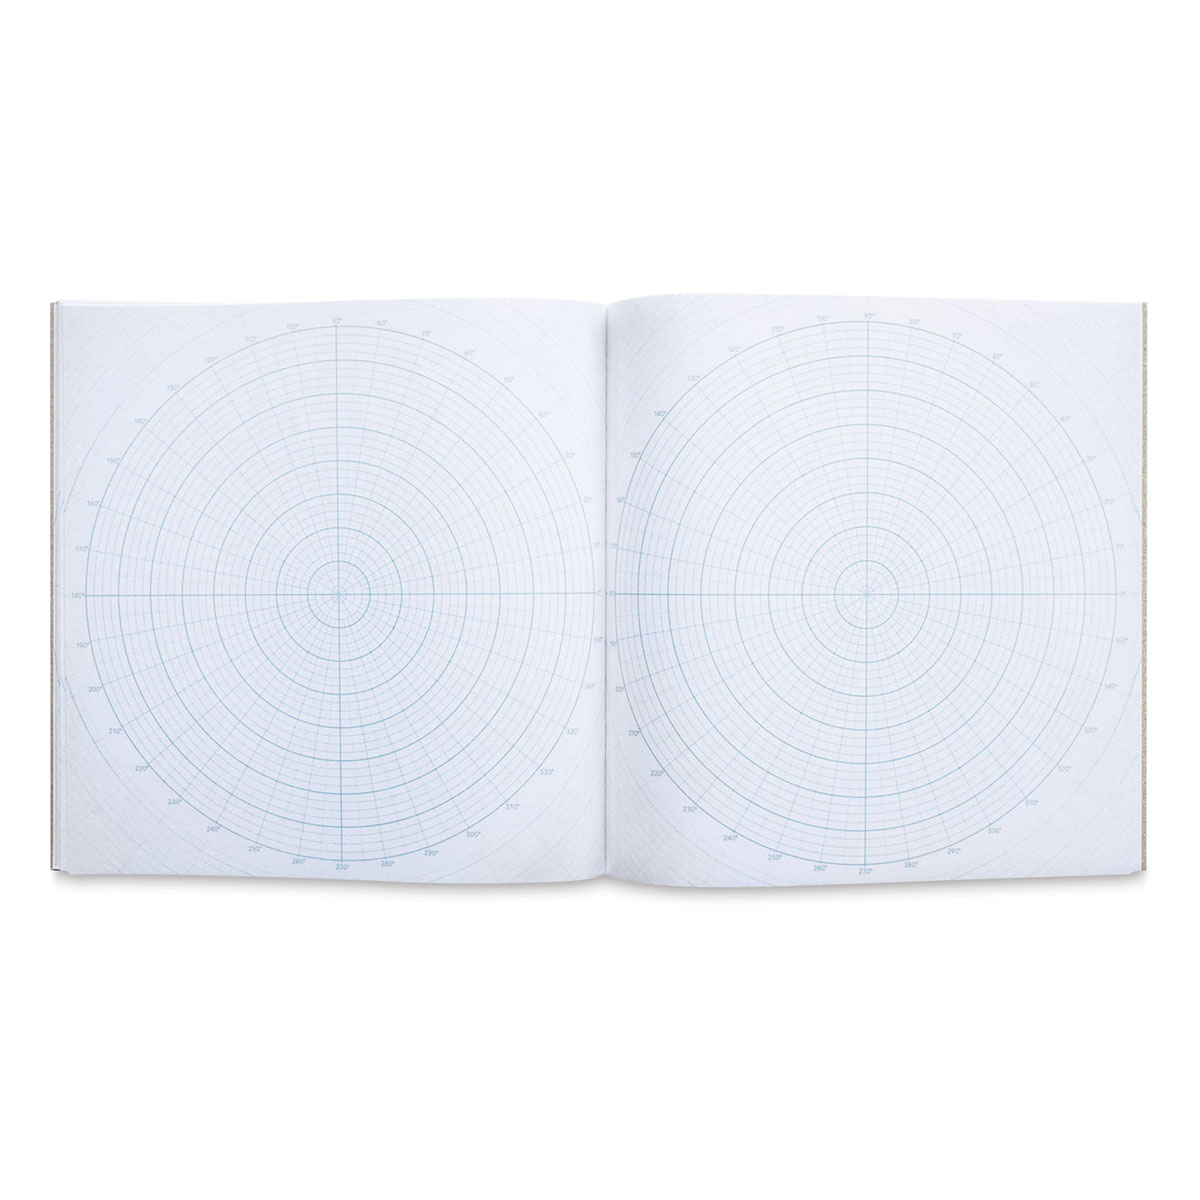 Koala Tools 1594891 Circular Grid Sketchbook 8.5 x 8.5 in. - 60 Sheets